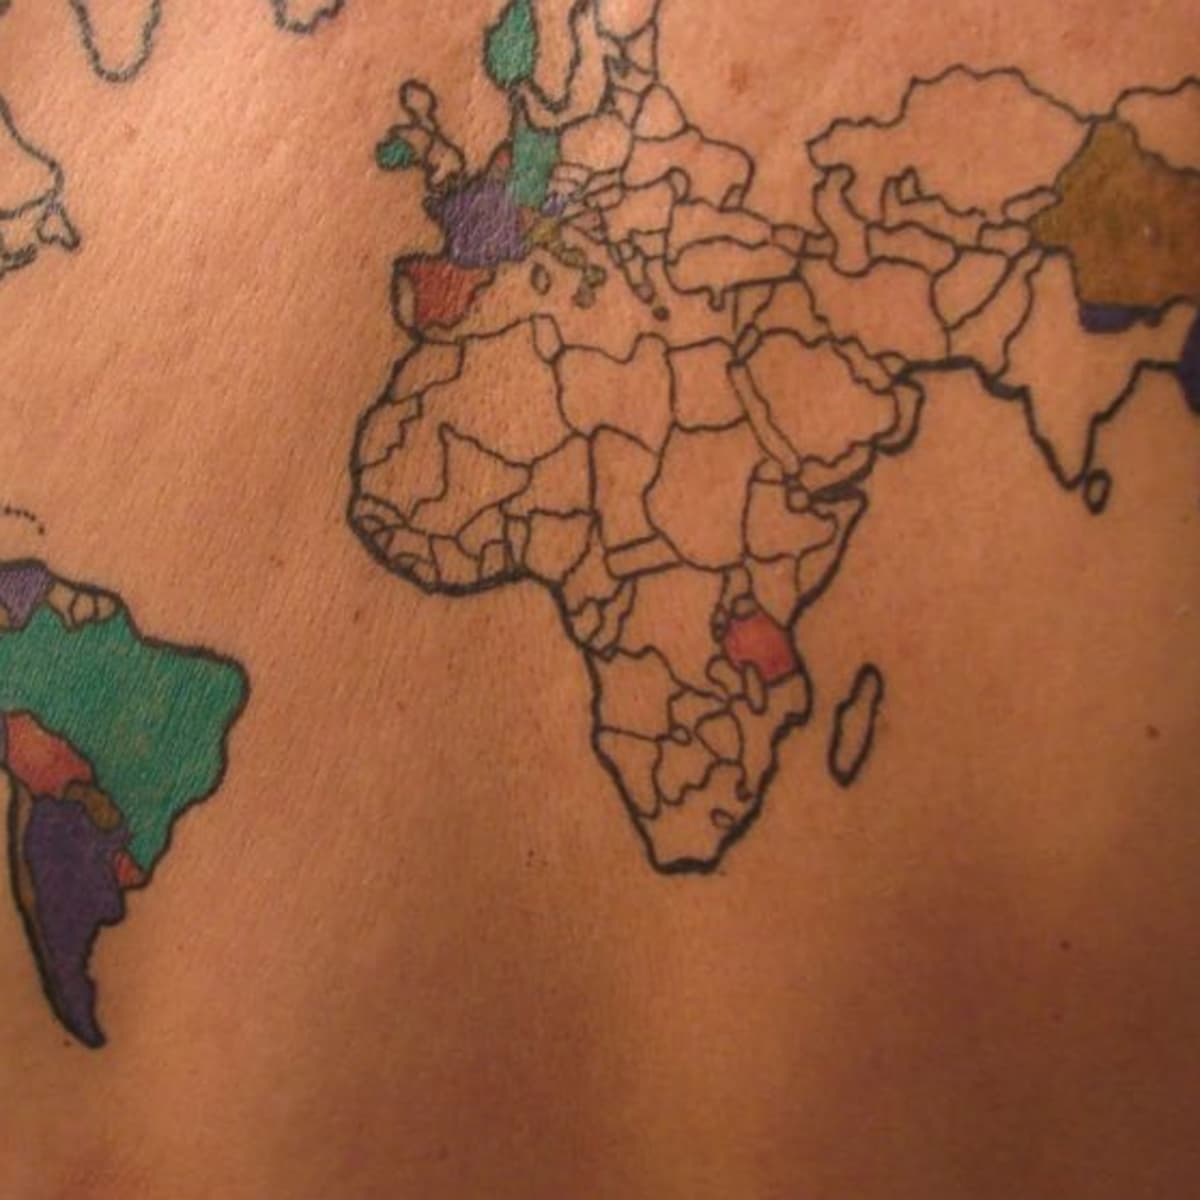 Kingleo Tattooz: Inspiring Travel Tattoos for Adventurers